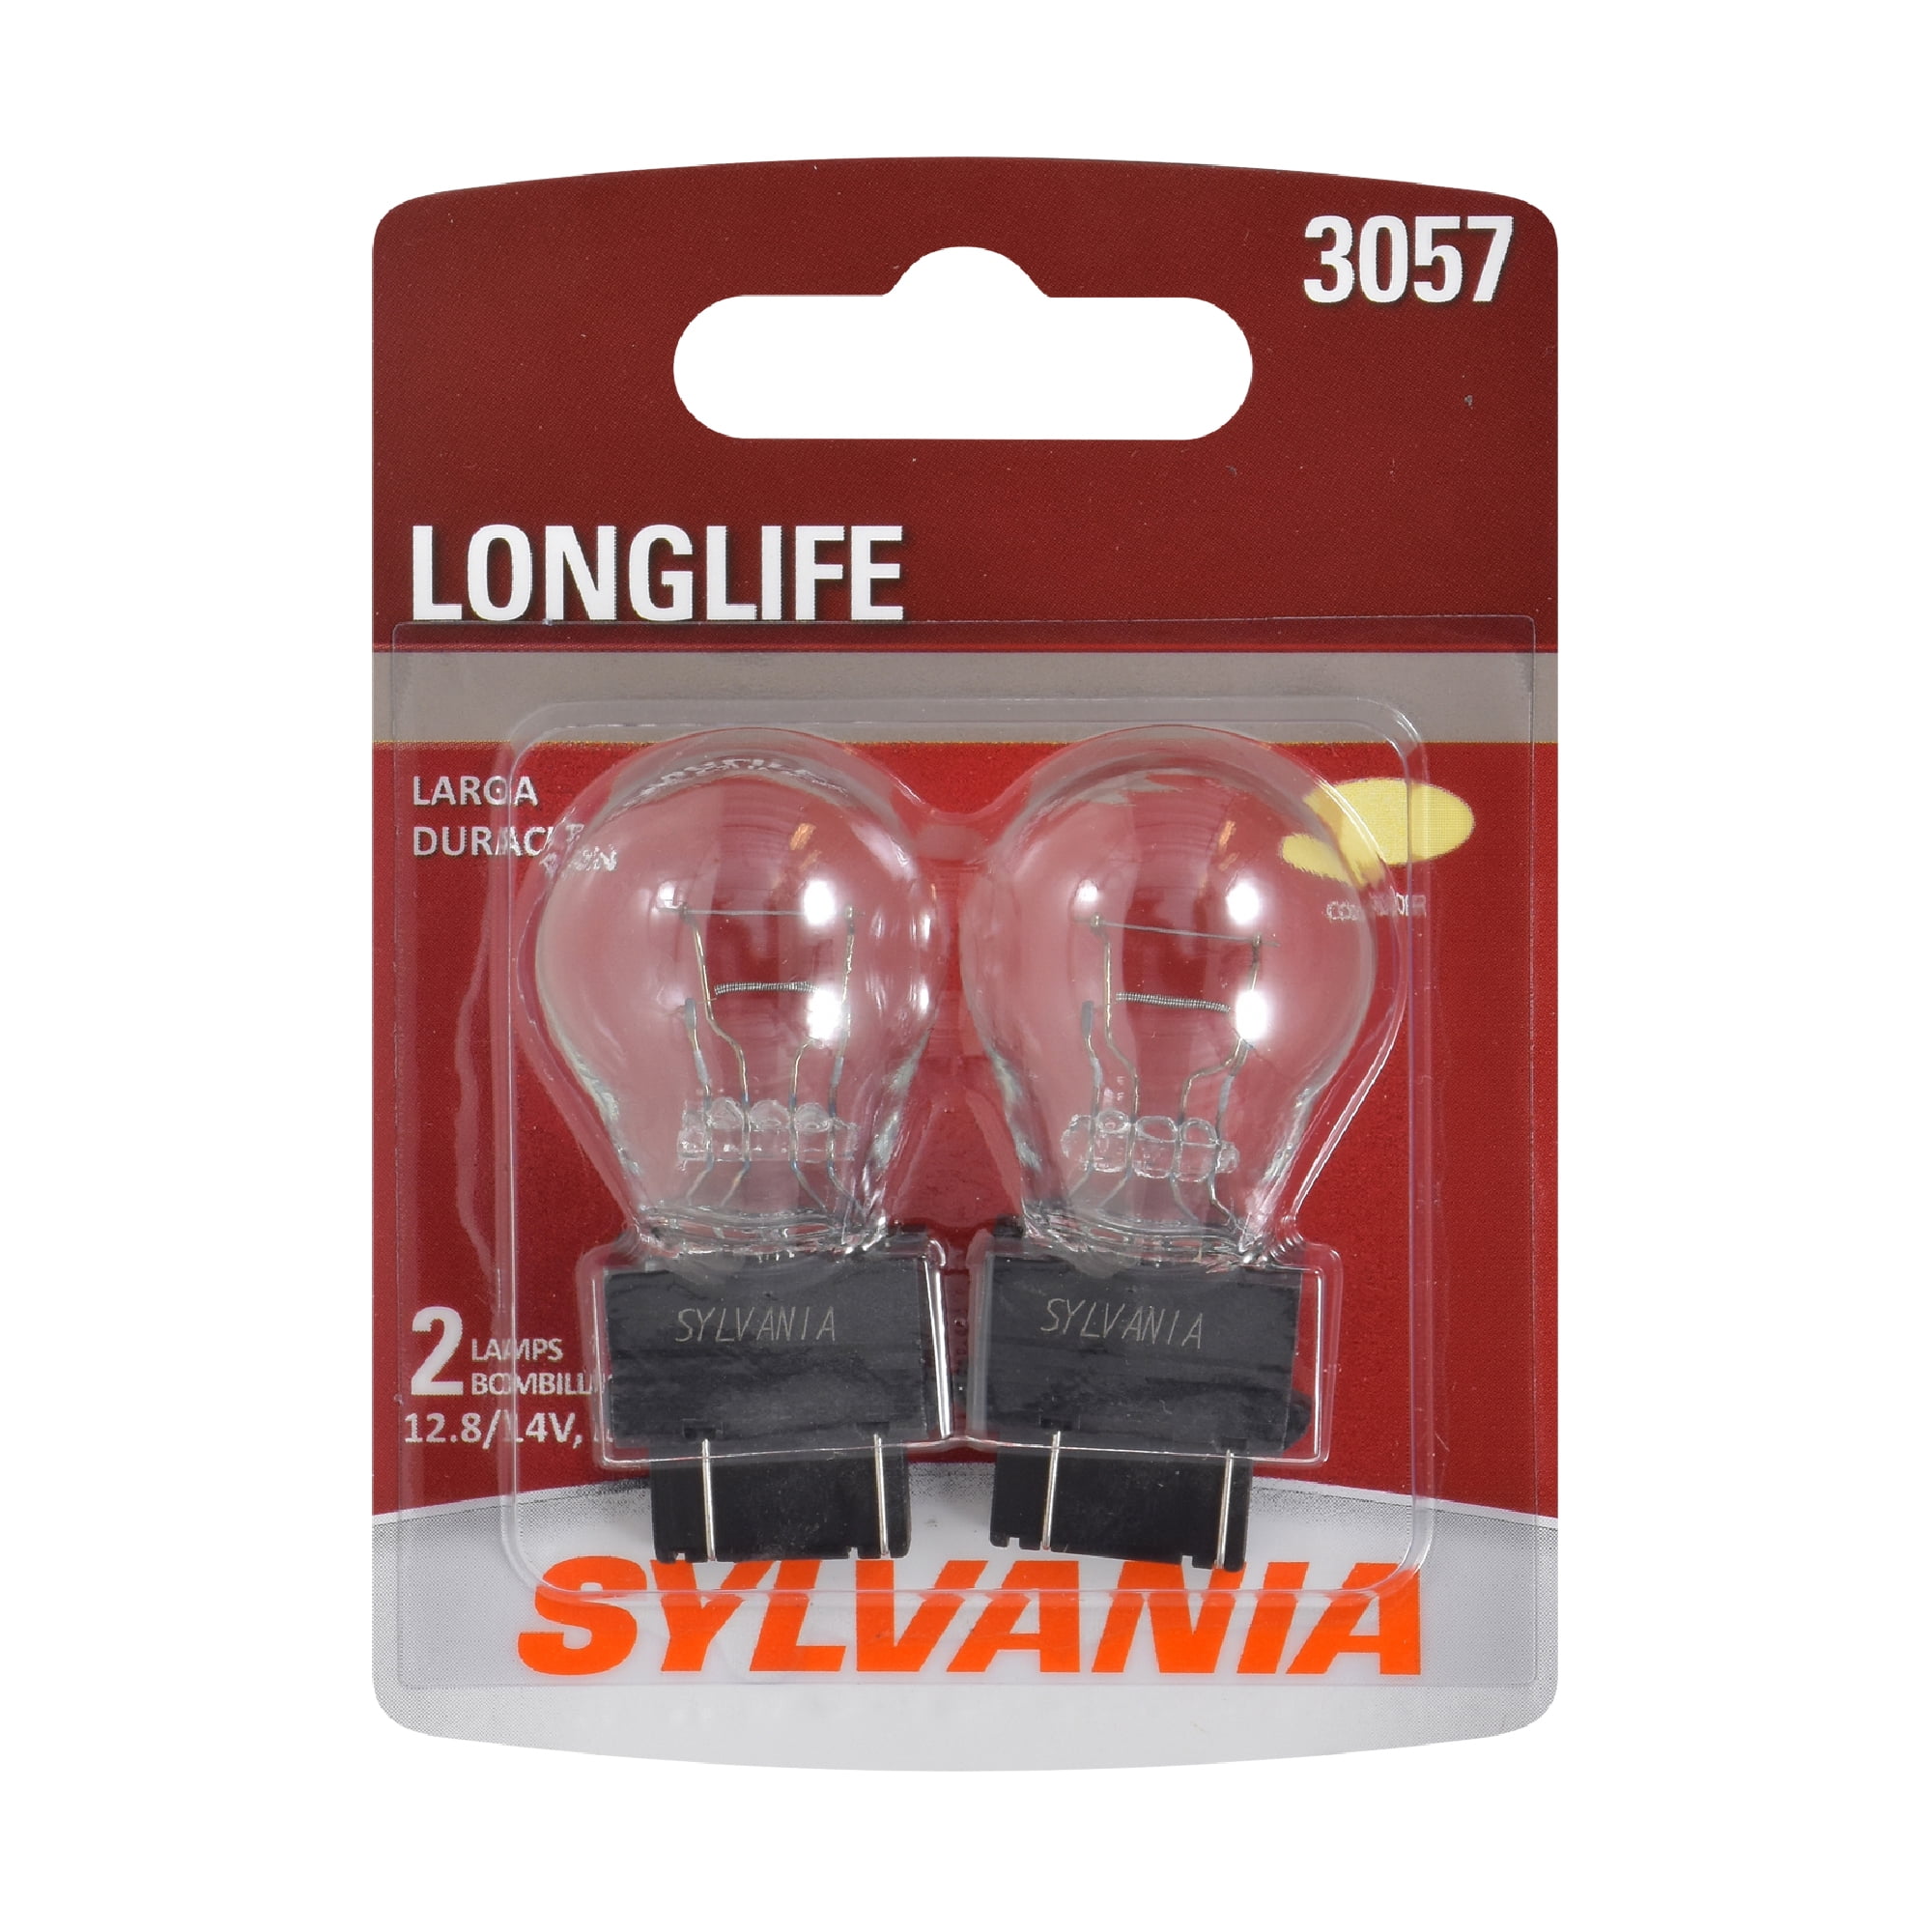 Sylvania 3057 Long Life Automotive Mini Bulb, Pack of 2.